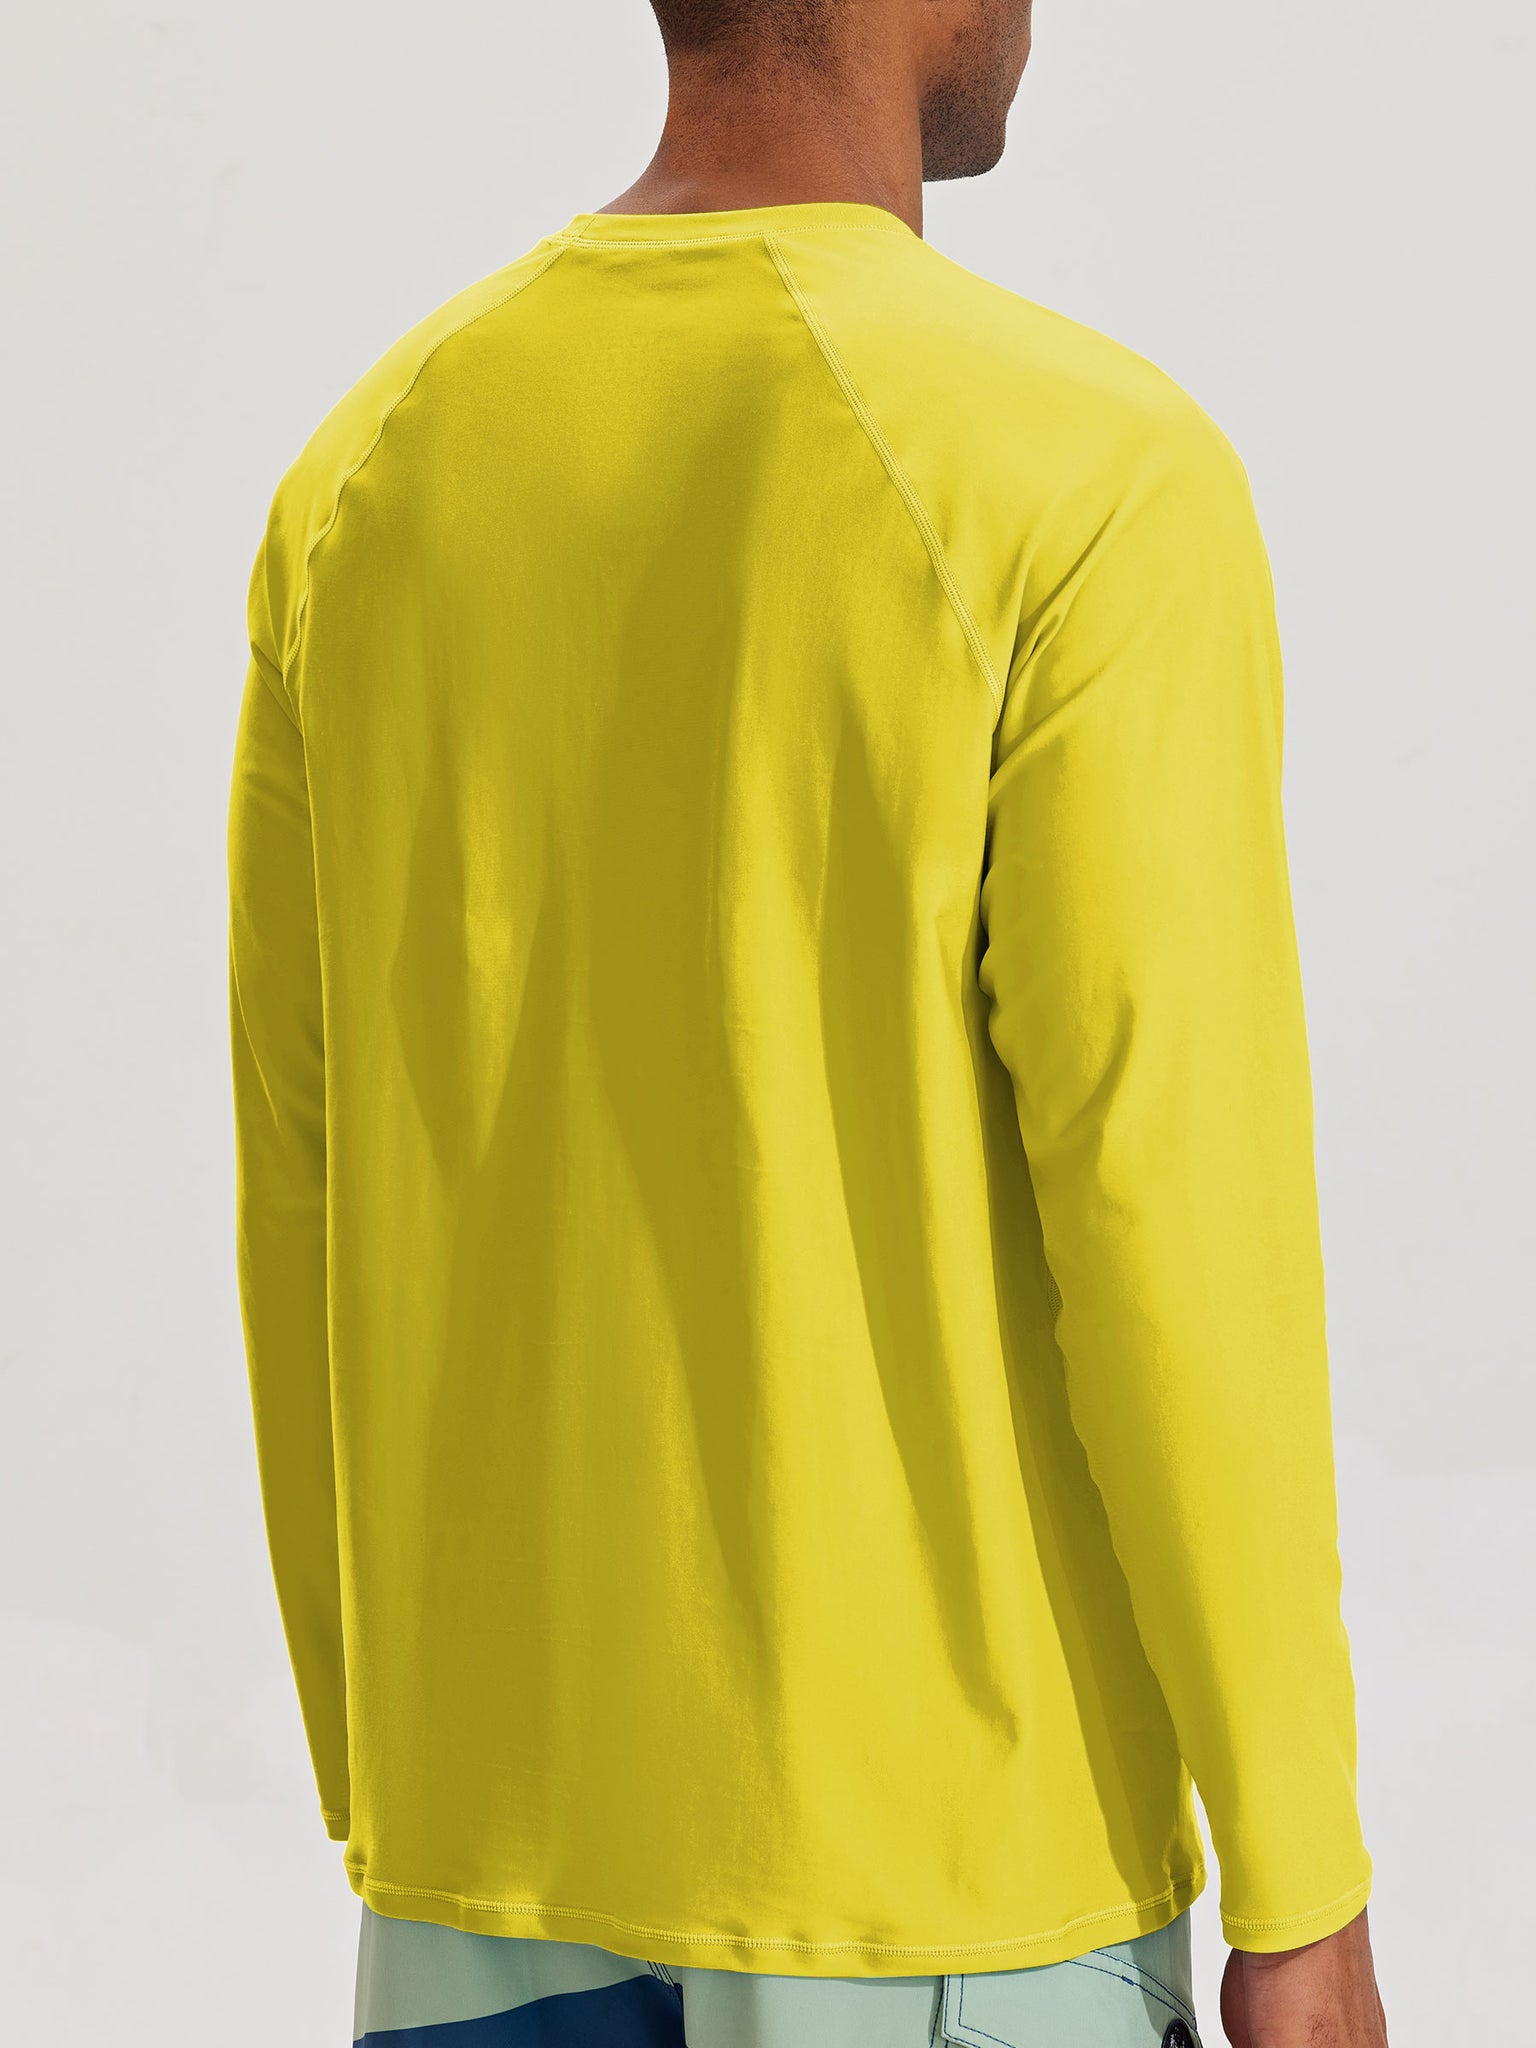 Men's Sun Protection Long Sleeve Shirt_Yellow_model3